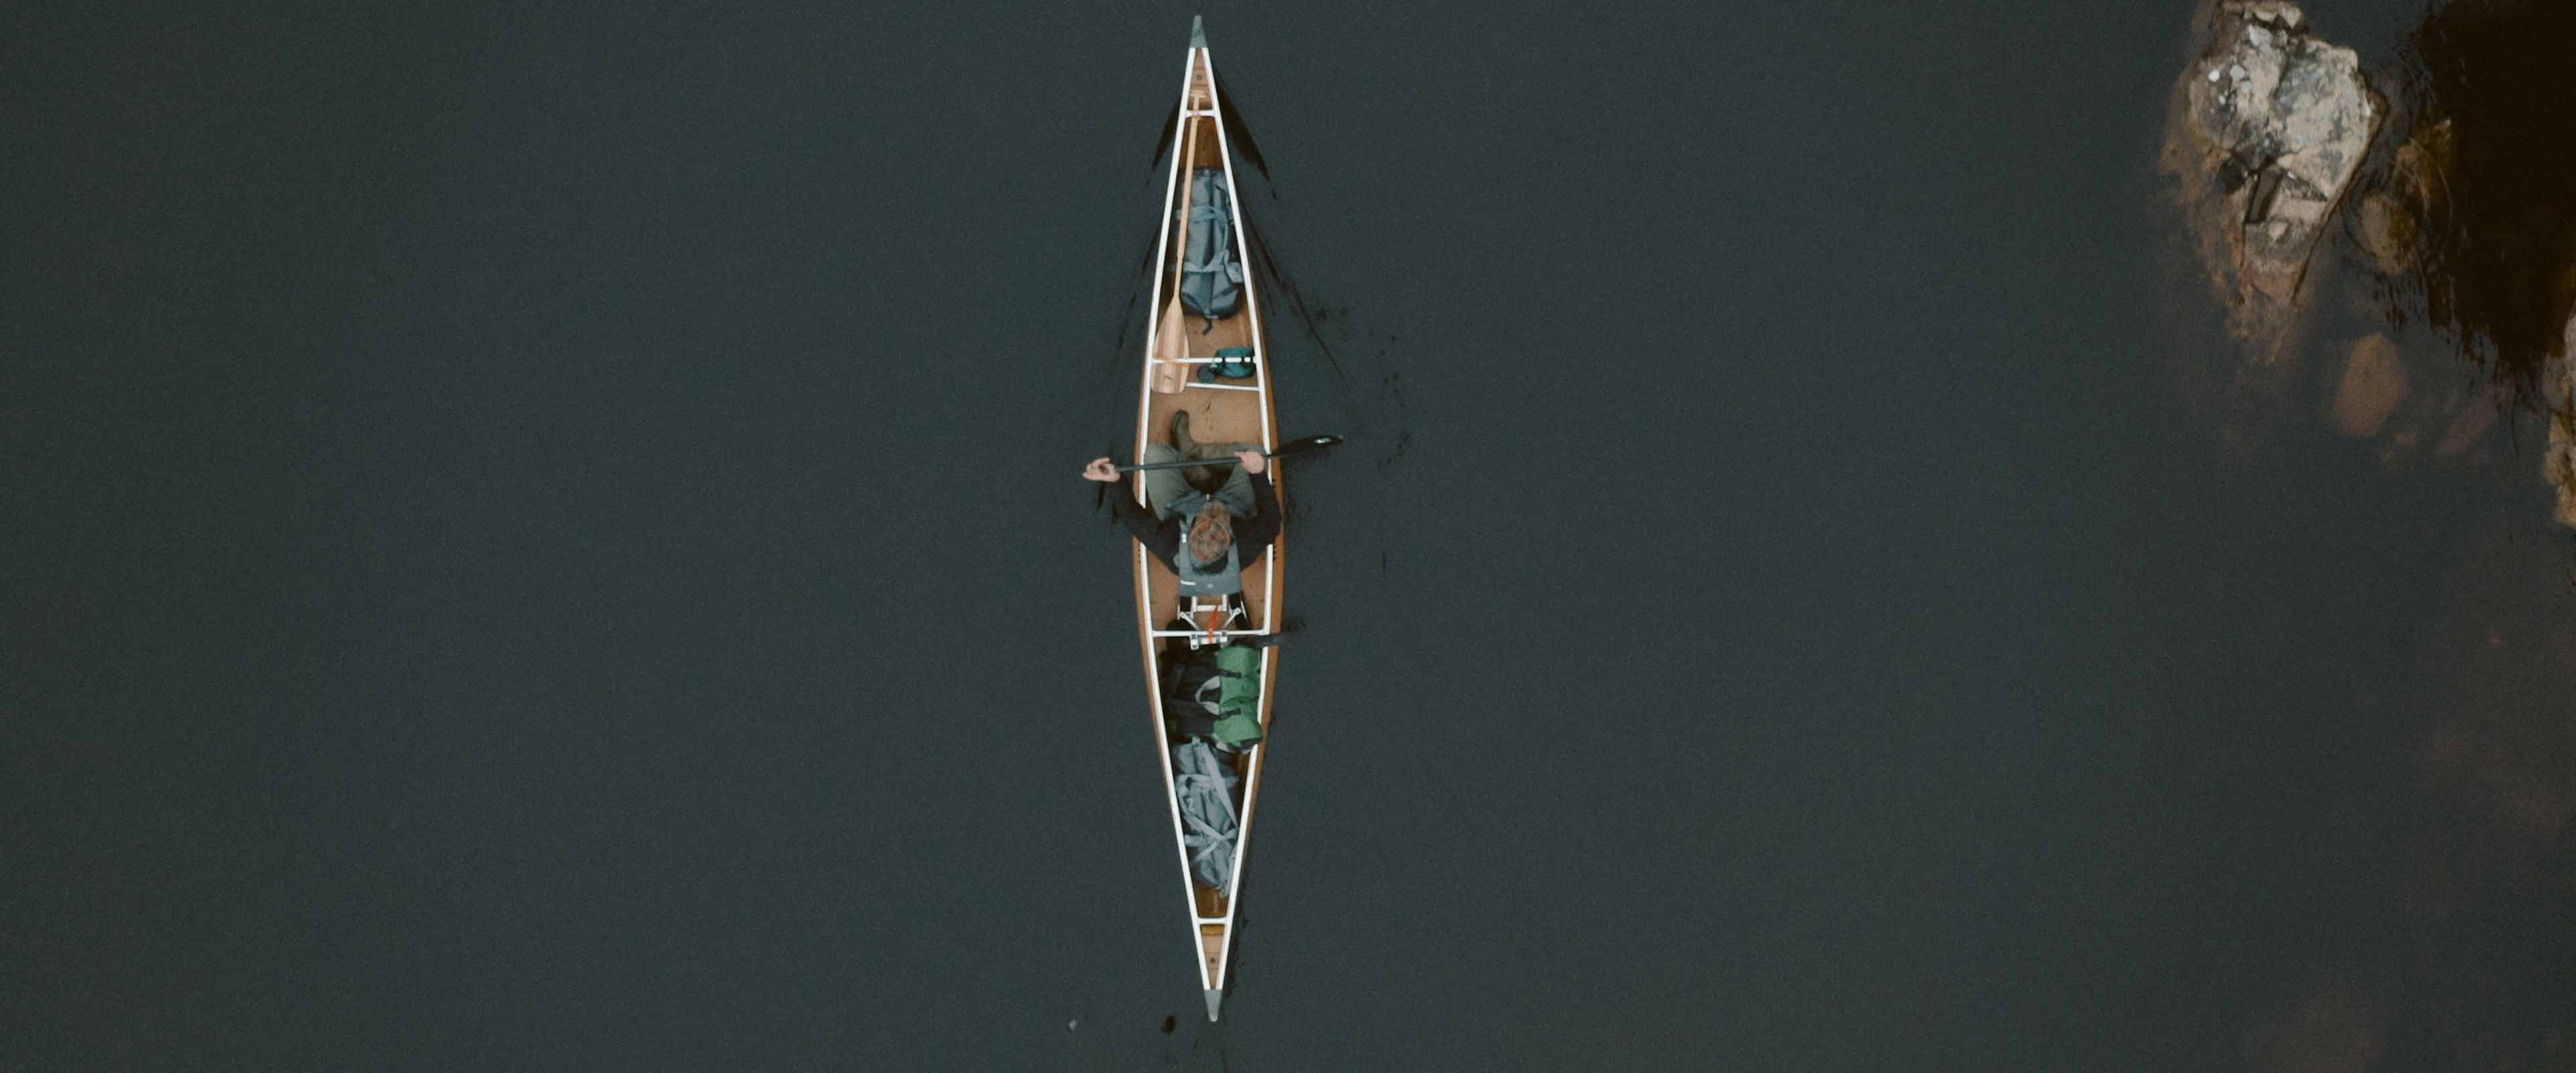 finding-rhythm-canoeing-aerial-drone-overhead-documentary